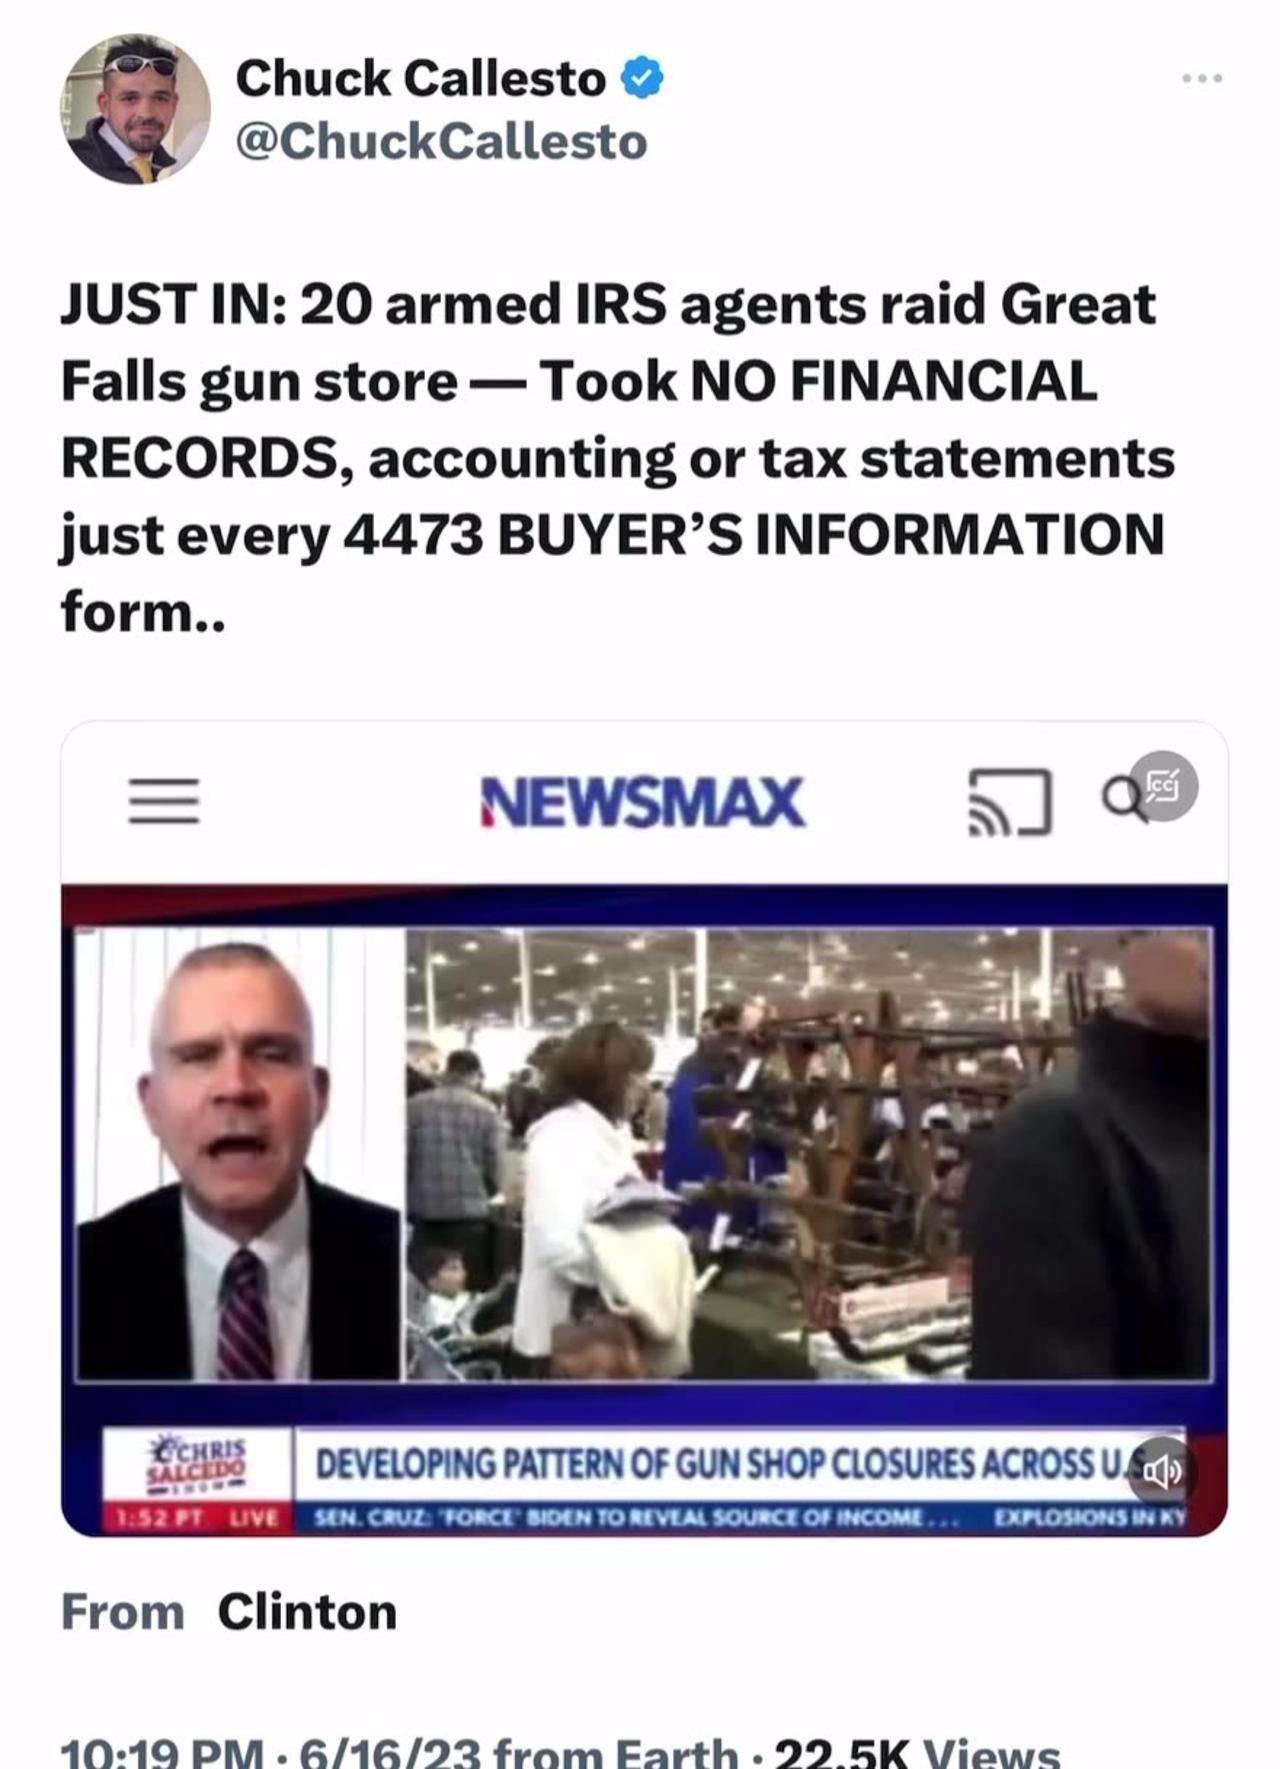 IRS agents raid gun store.